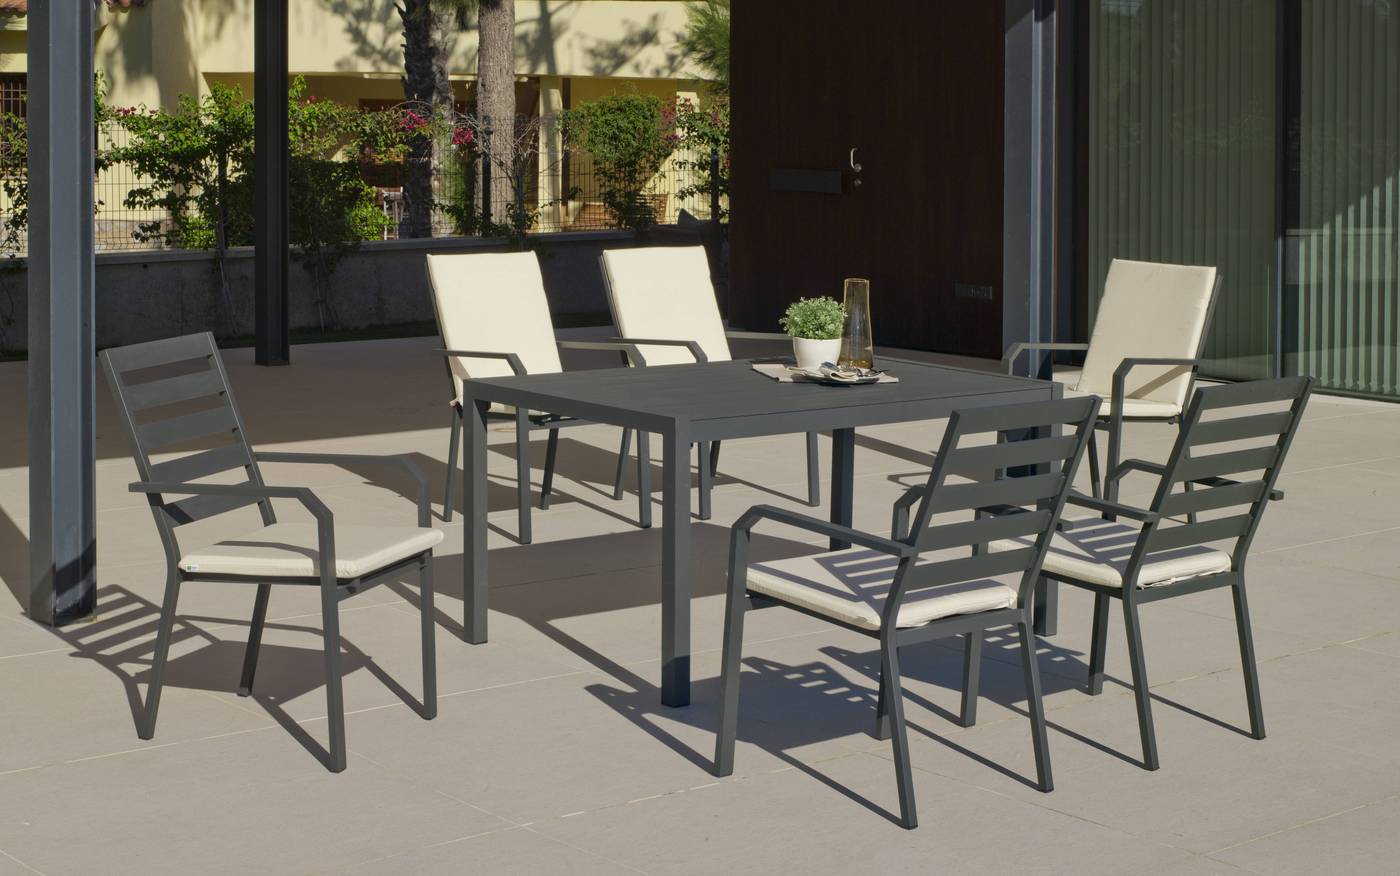 Set Aluminio Palma-Caravel 150-6 - Conjunto aluminio luxe: Mesa rectangular 150 cm + 6 sillones. Disponible en color blanco, antracita, champagne, plata o marrón.